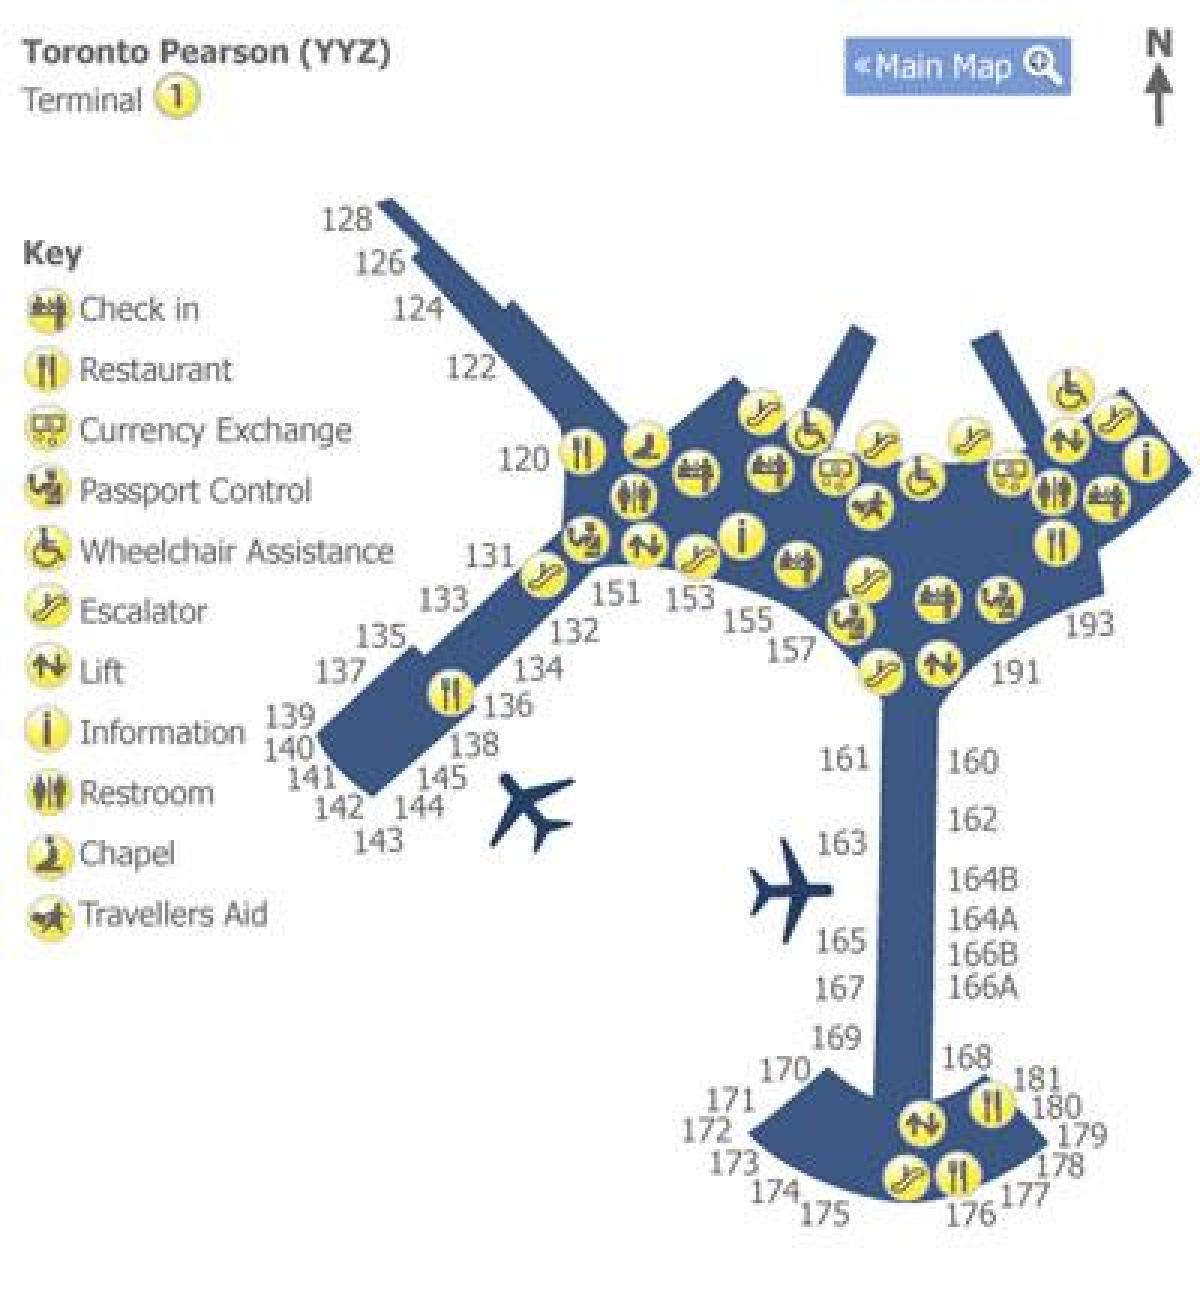 Map of Toronto Pearson airport terminal 1